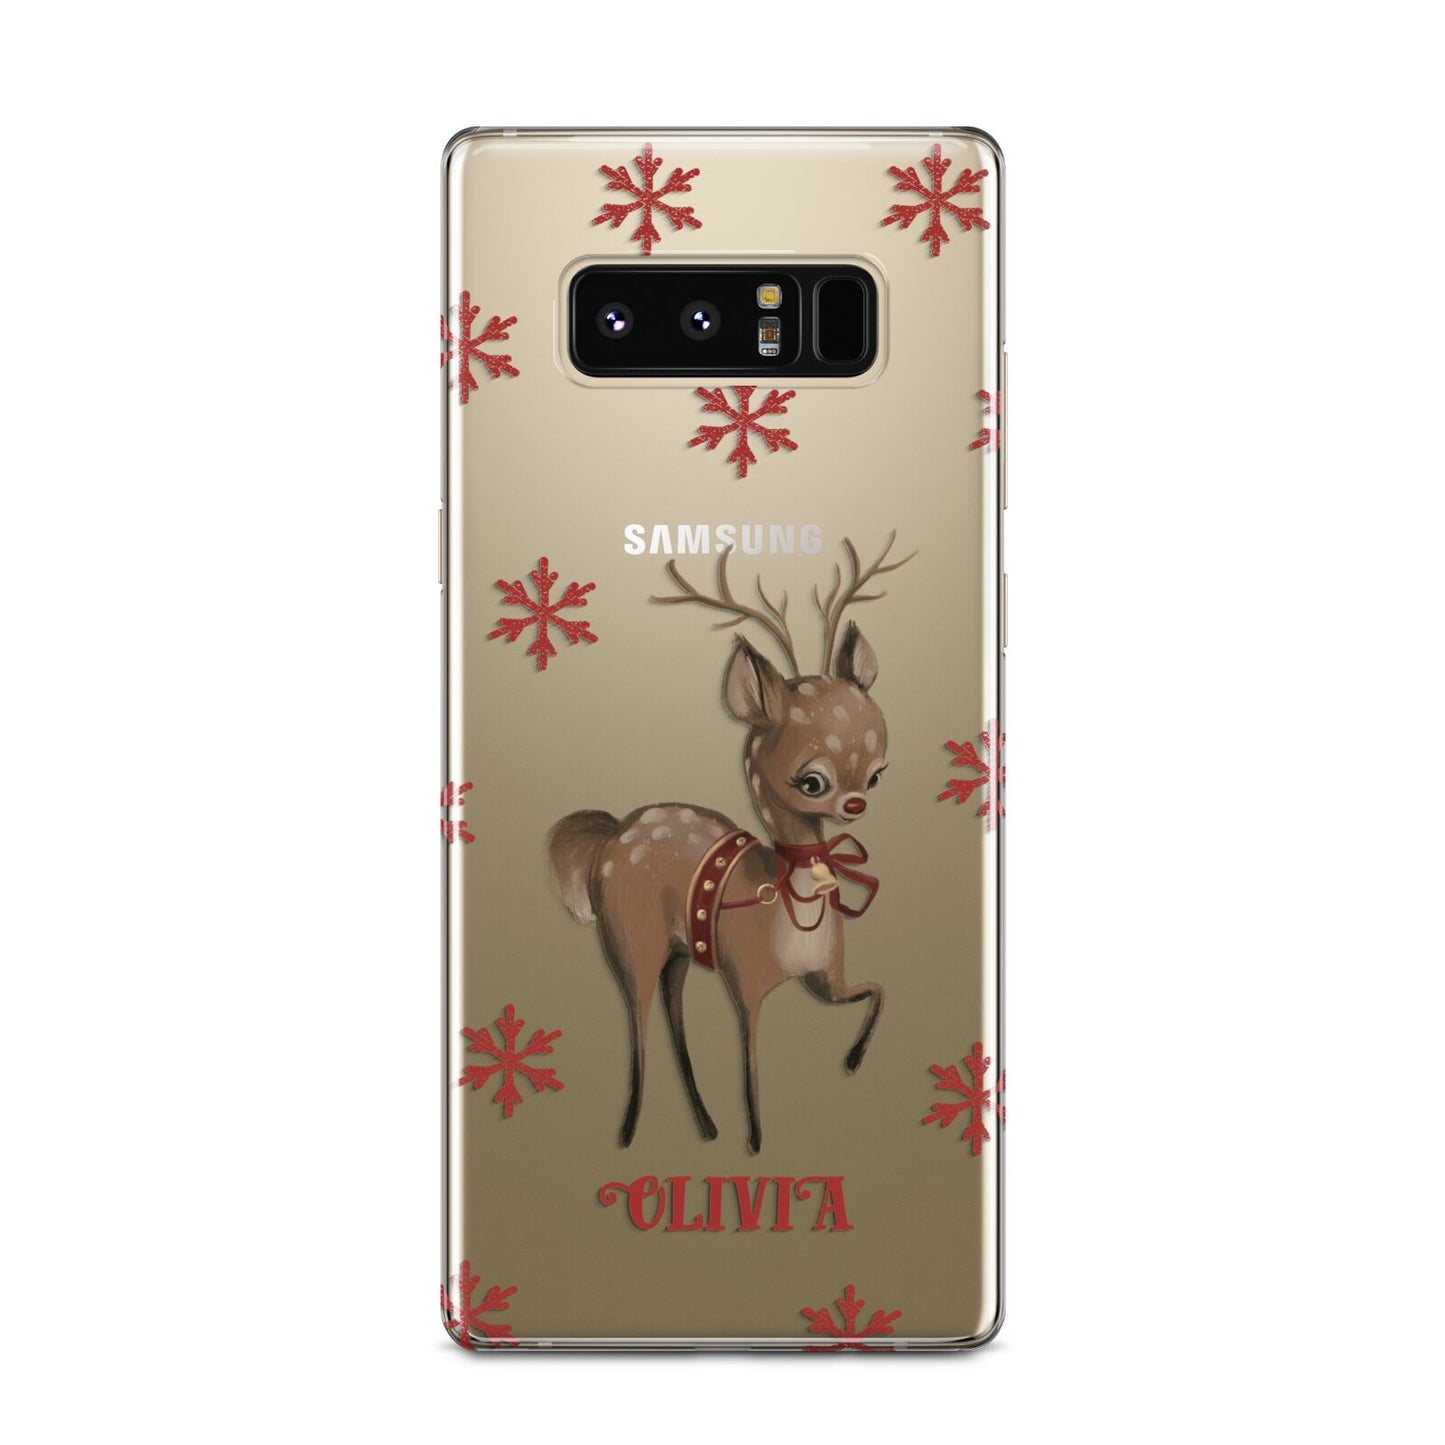 Rudolph Delivery Samsung Galaxy Note 8 Case